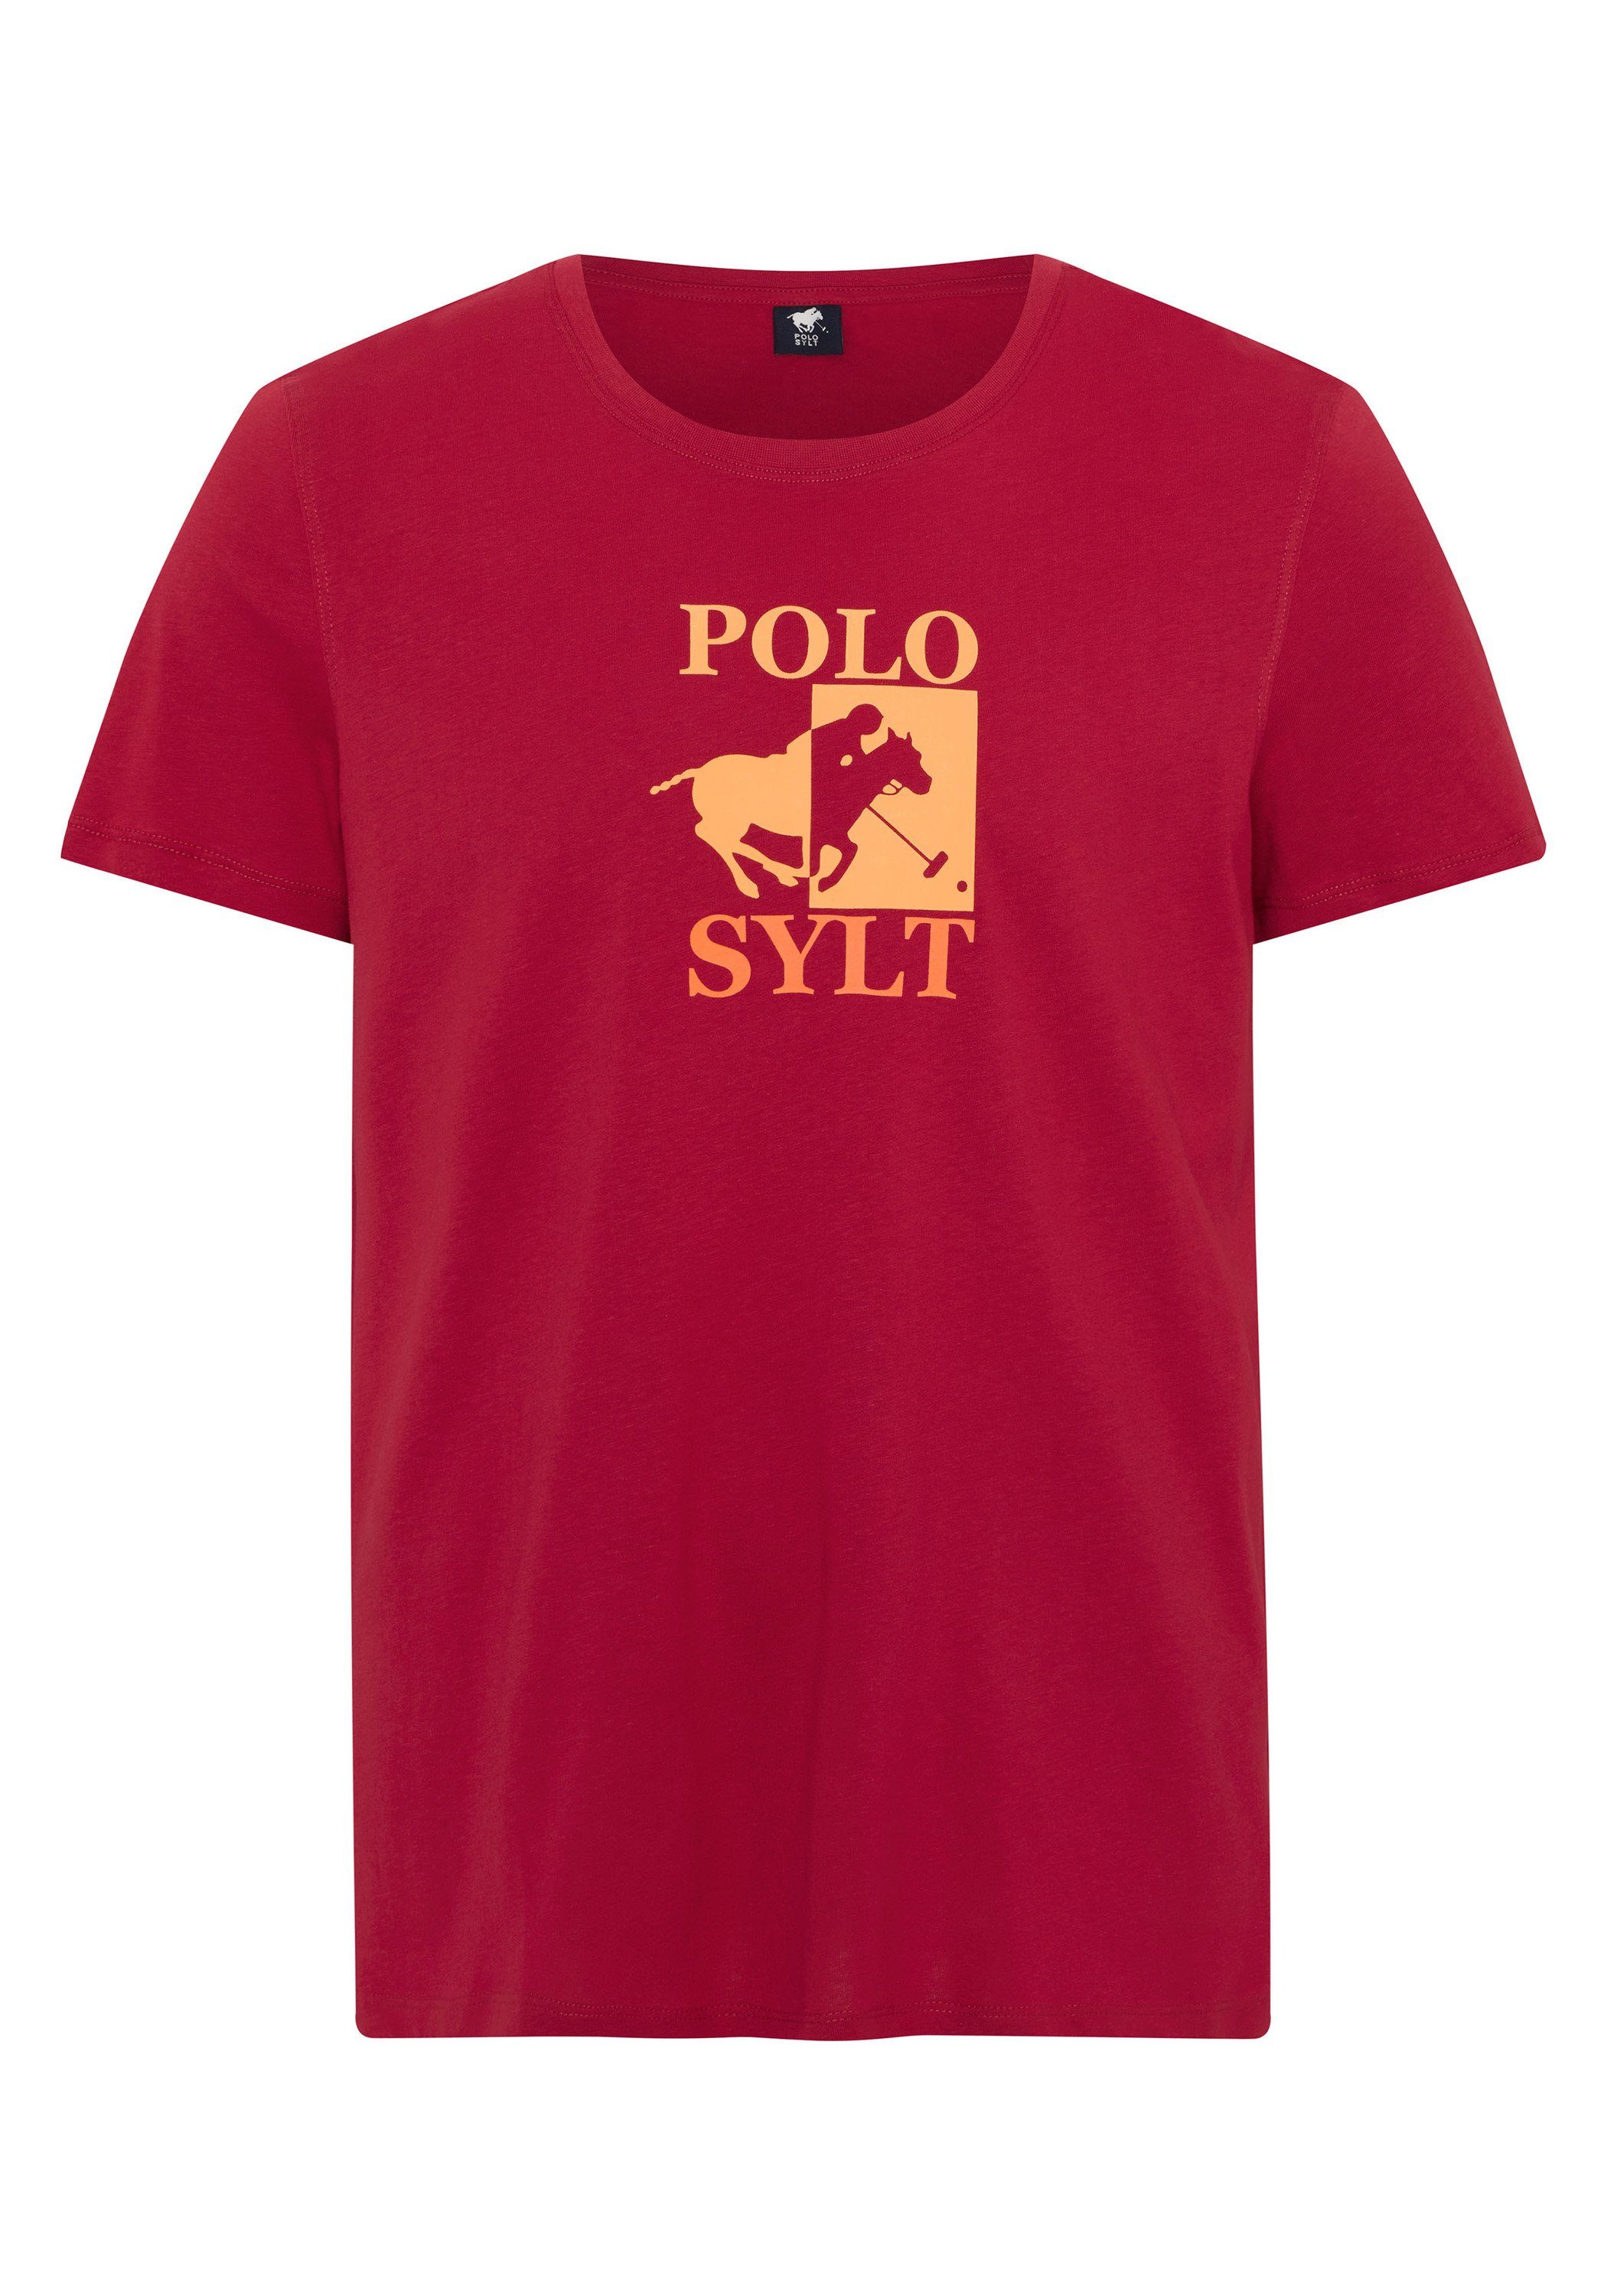 Polo Sylt Print-Shirt mit großem Logoprint 19-1557 Chili Pepper